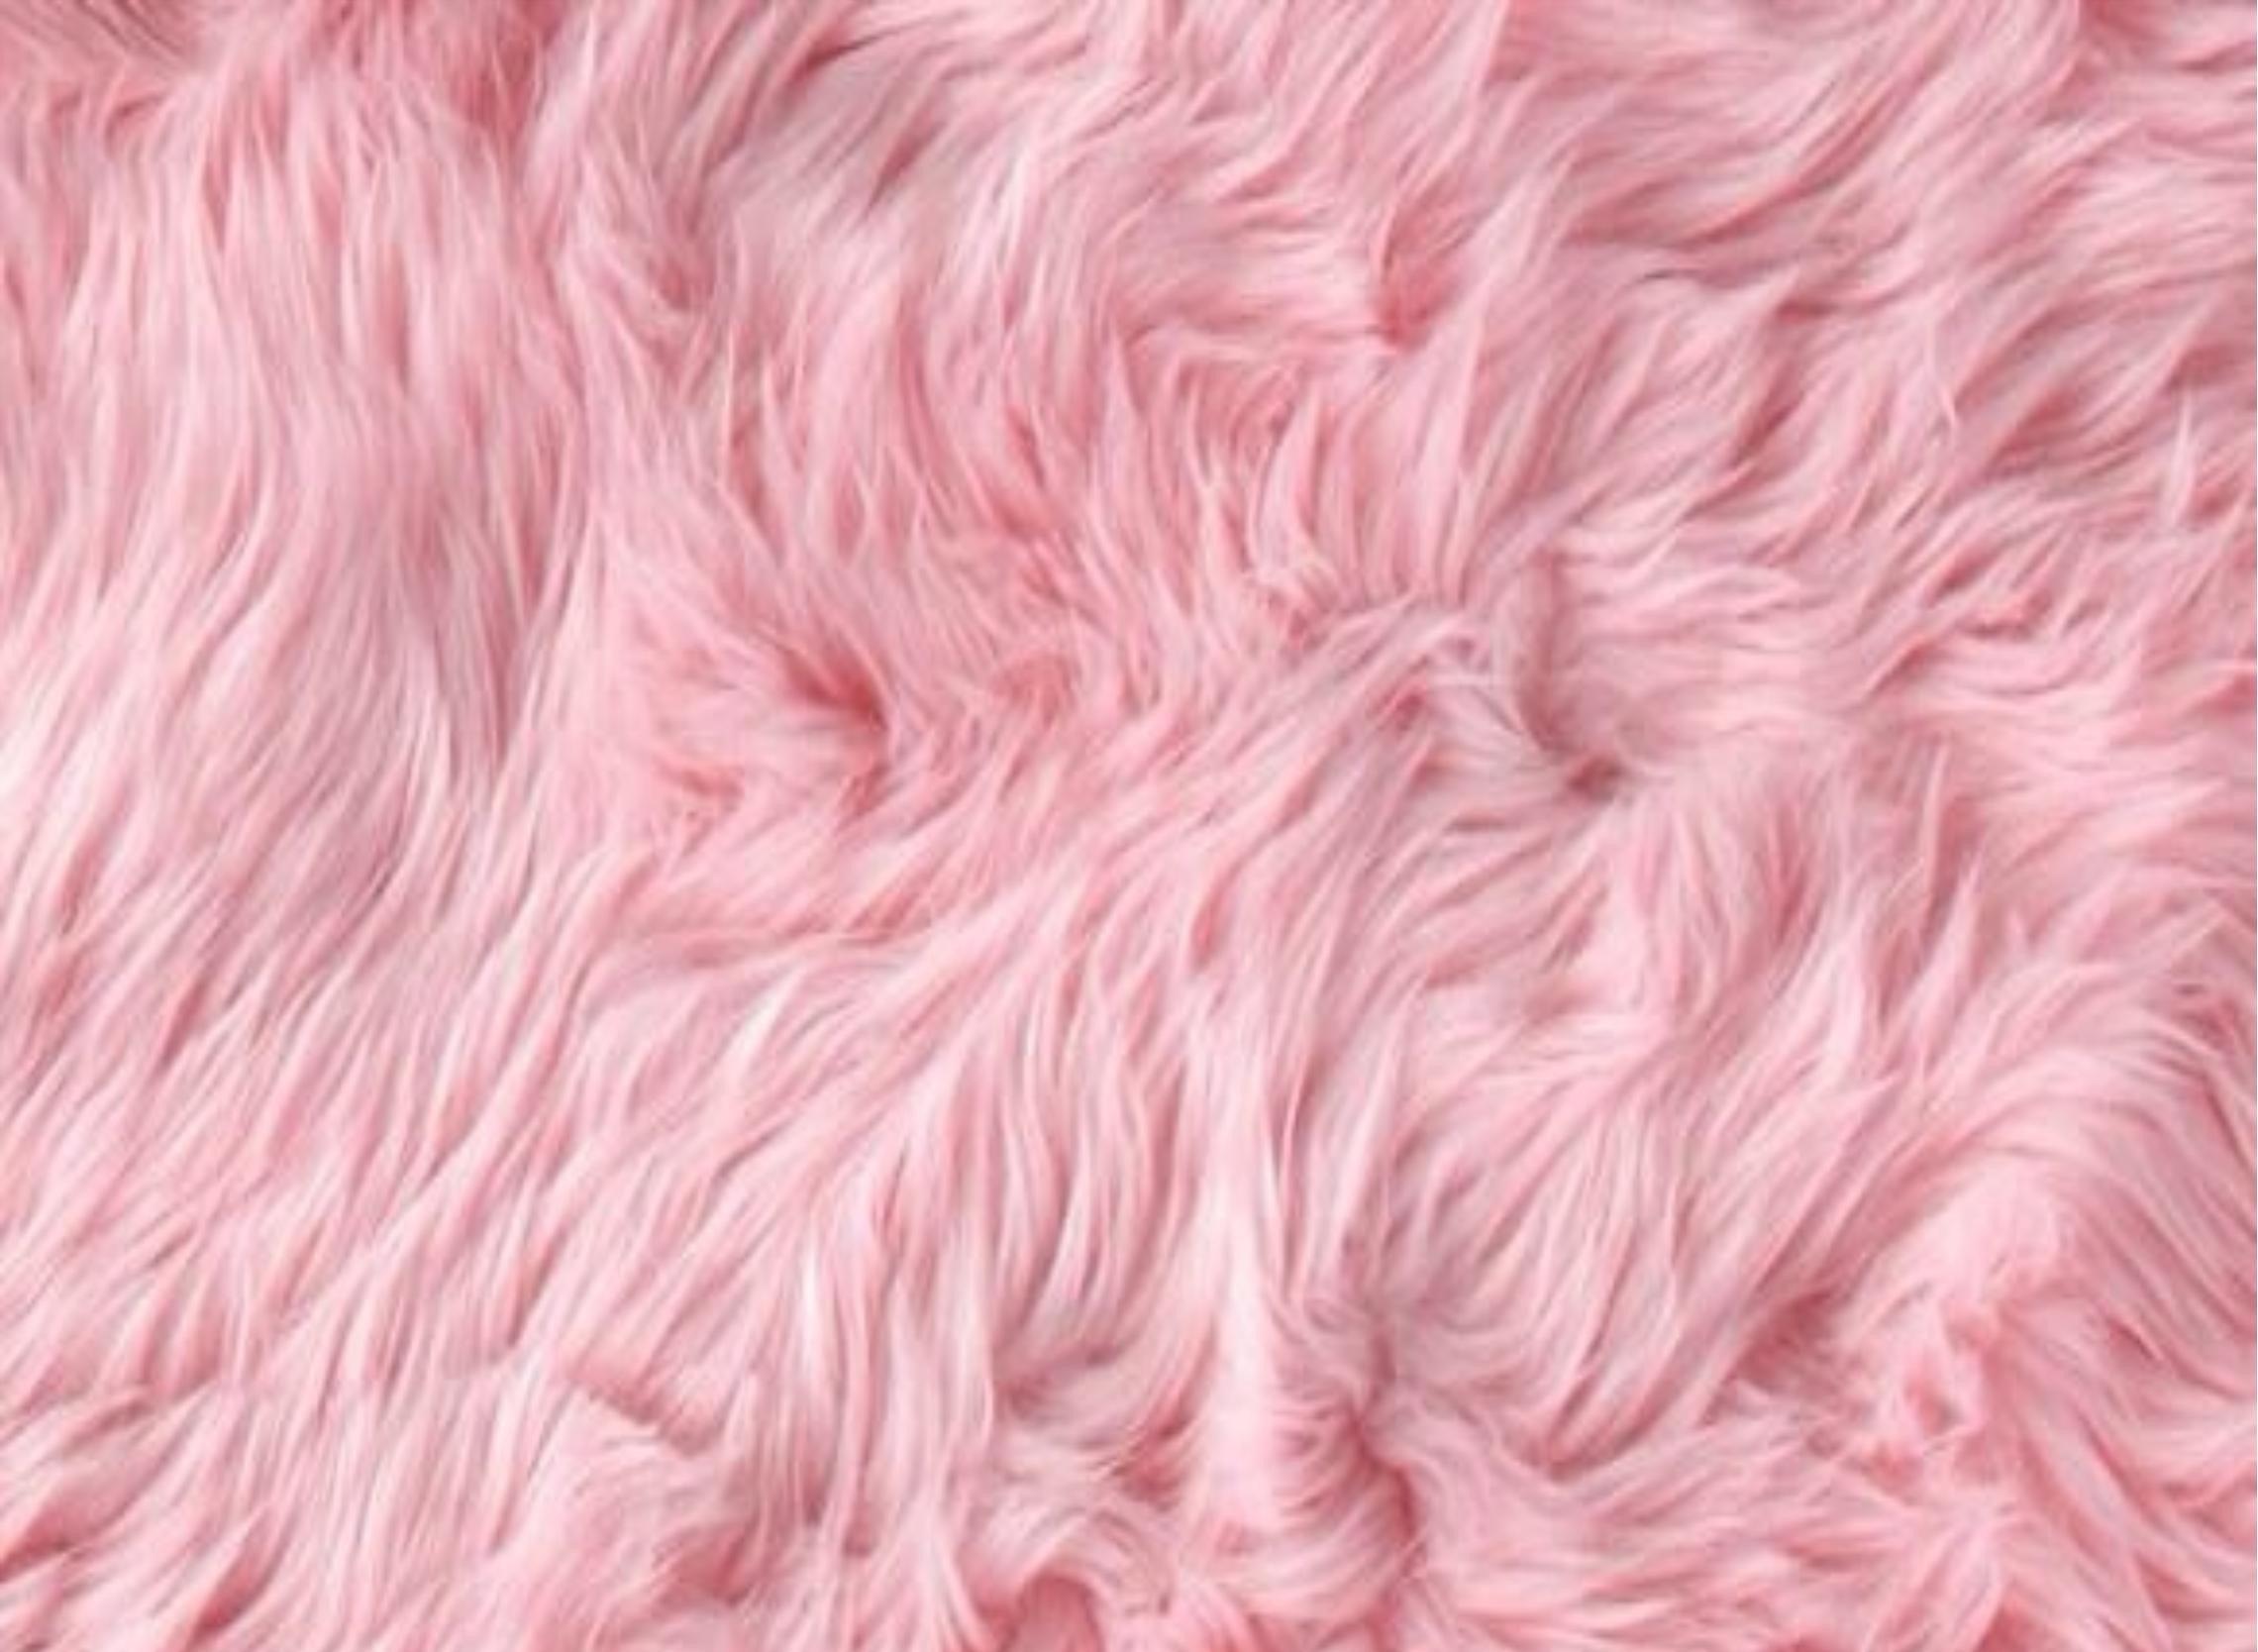 93 Wallpaper Pink Tumblr Images - MyWeb